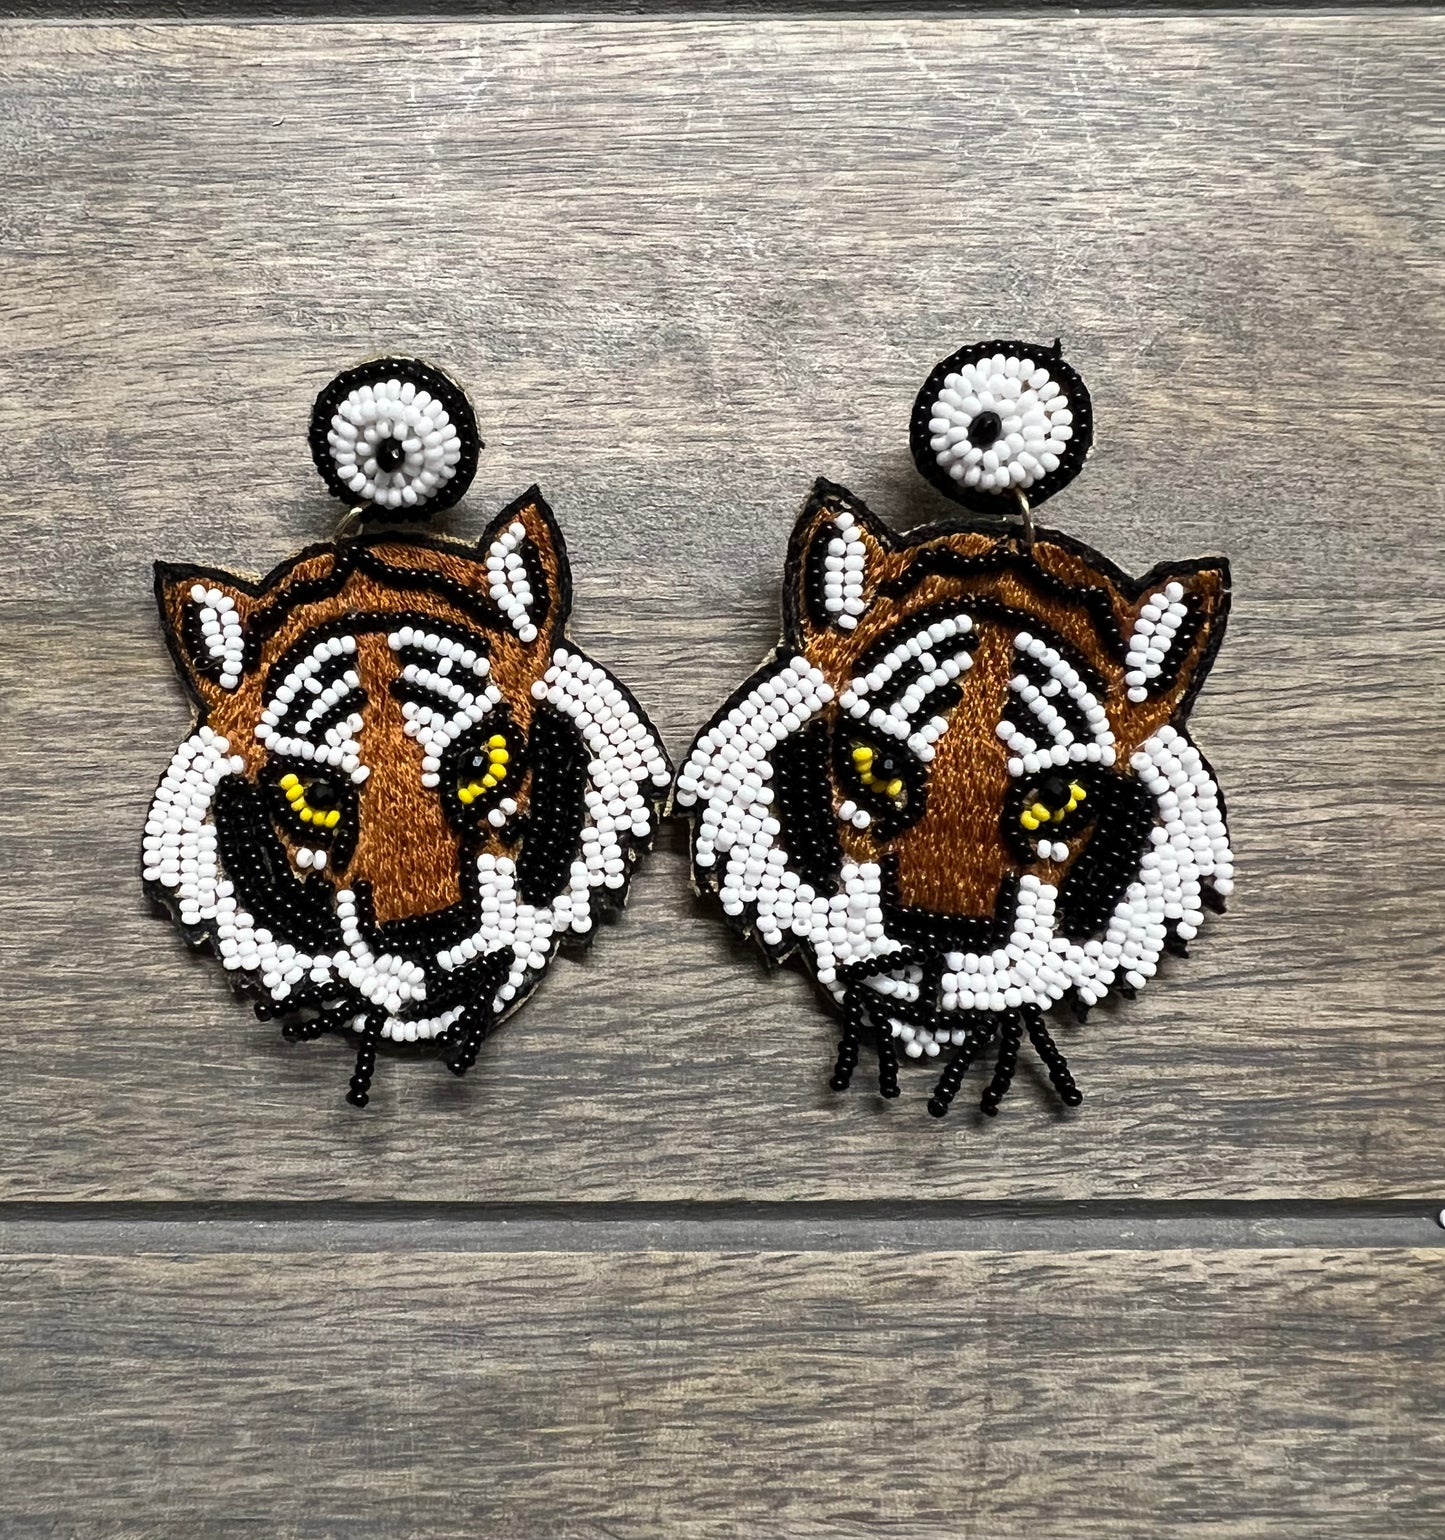 Beaded Tiger Earrings